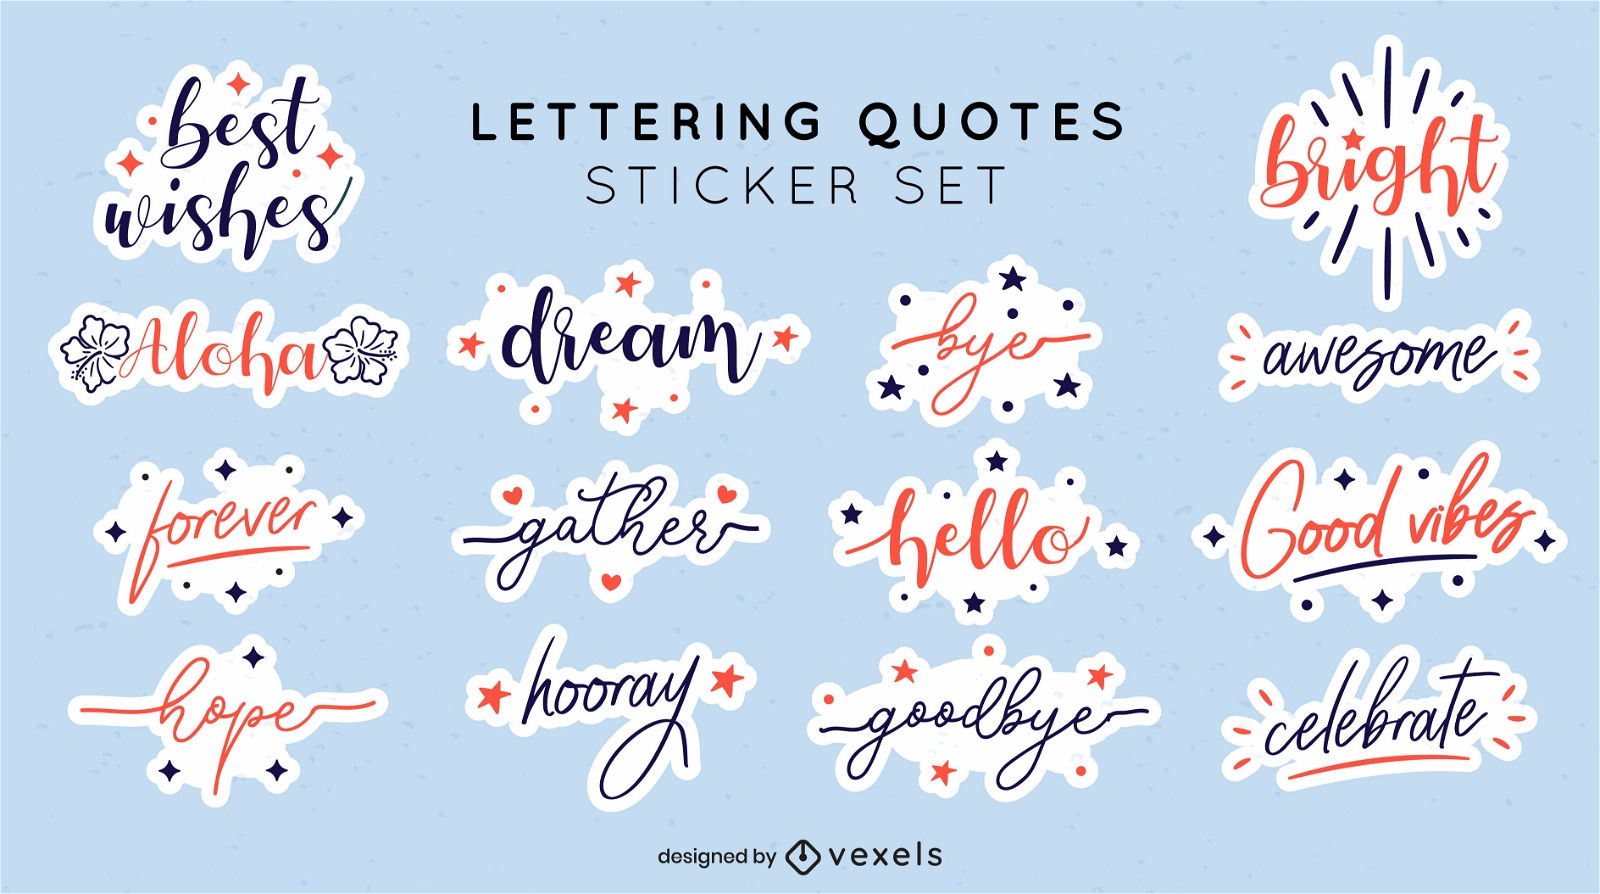 Lettering positive quotes sticker set